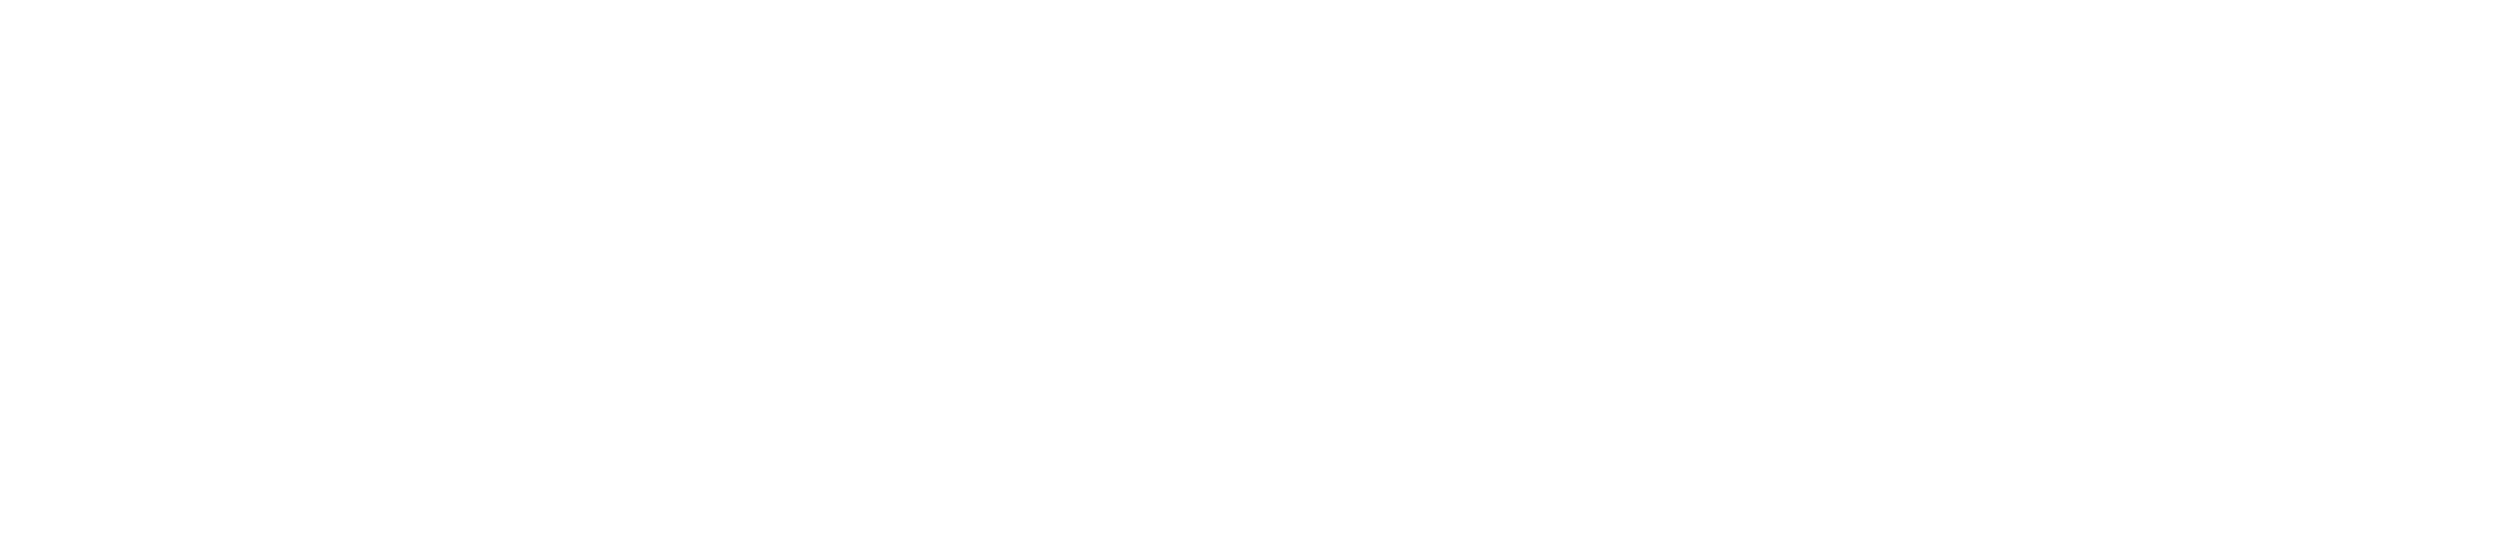 Zalando-SE-logo.png